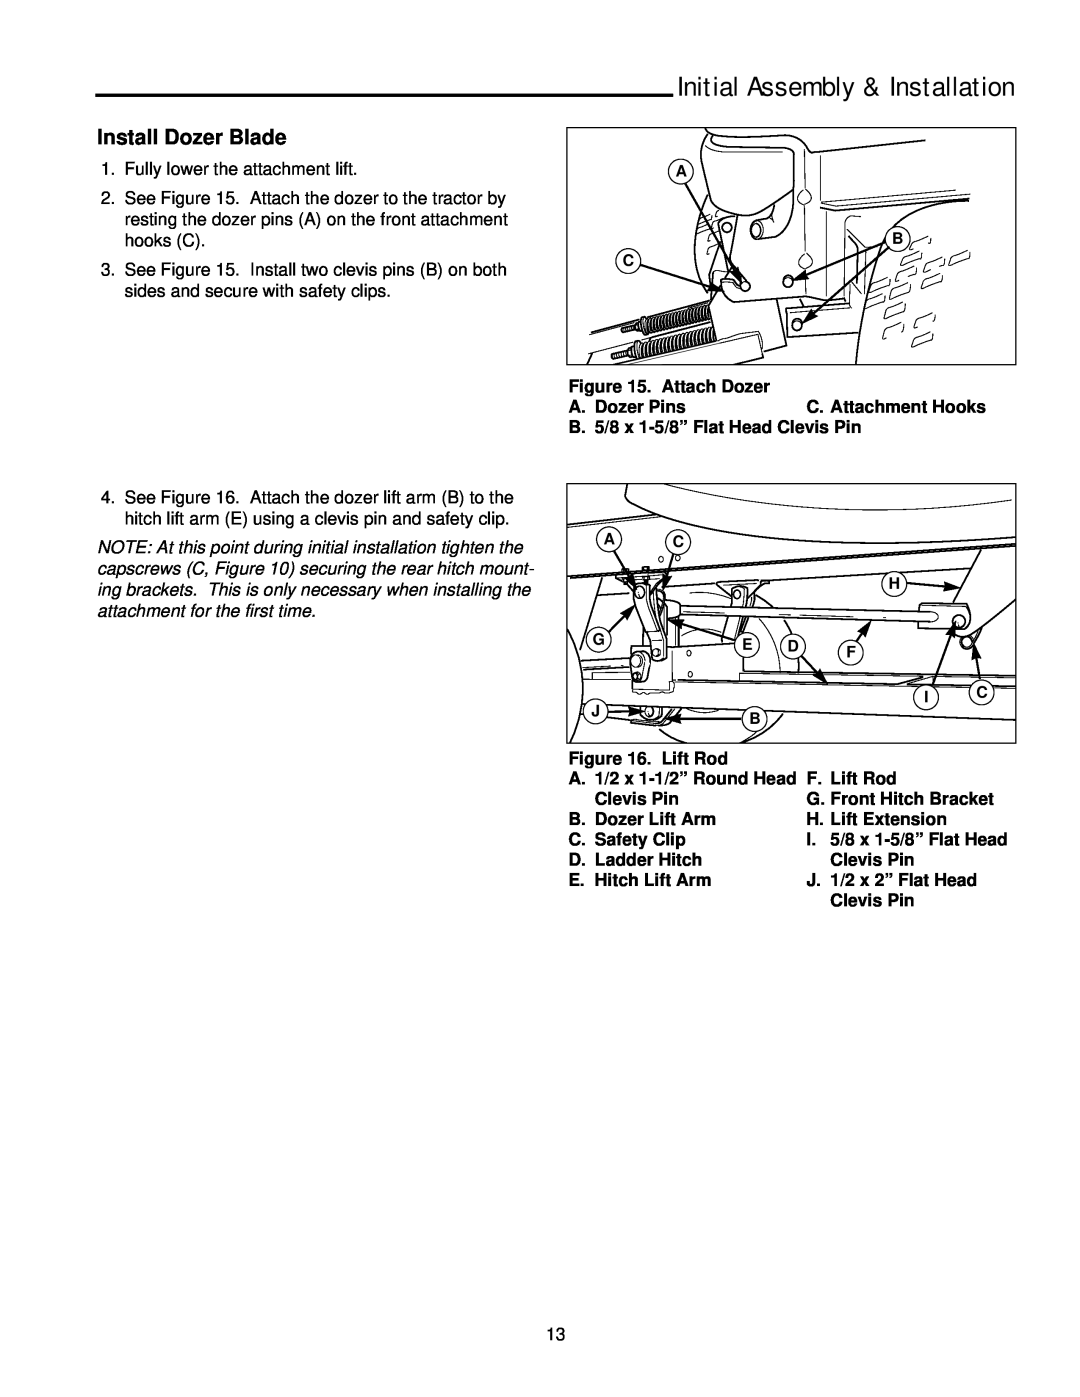 Snapper 2137 manual Initial Assembly & Installation, Install Dozer Blade 